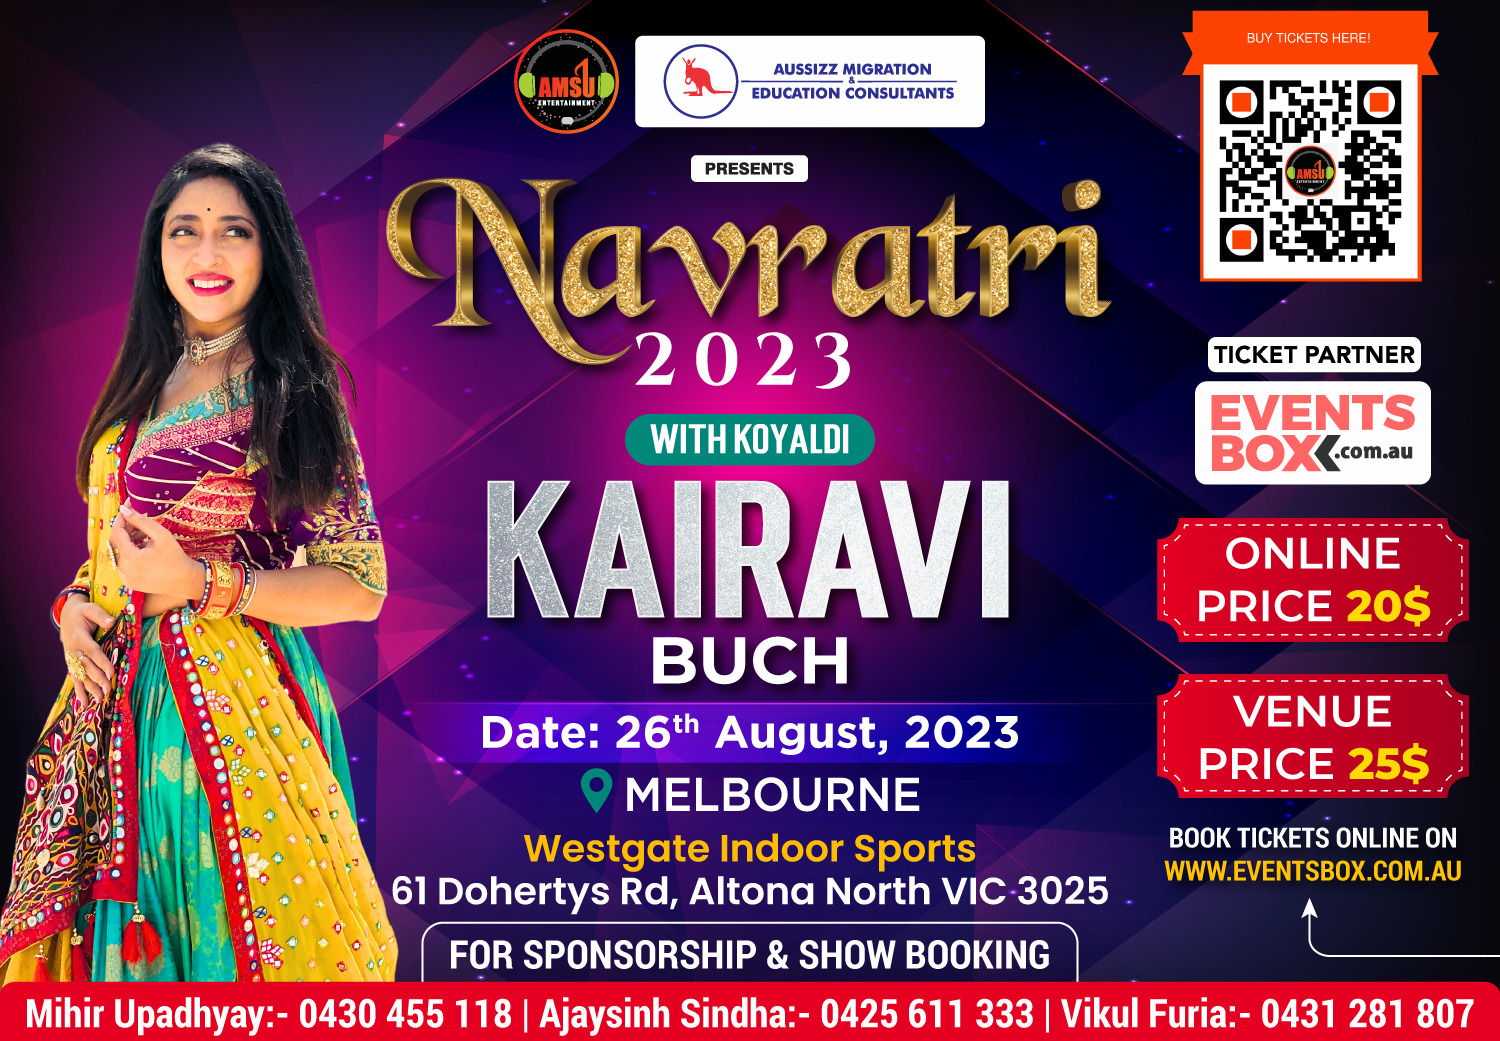 Navratri 2023 with Koyaldi Kairavi Buch